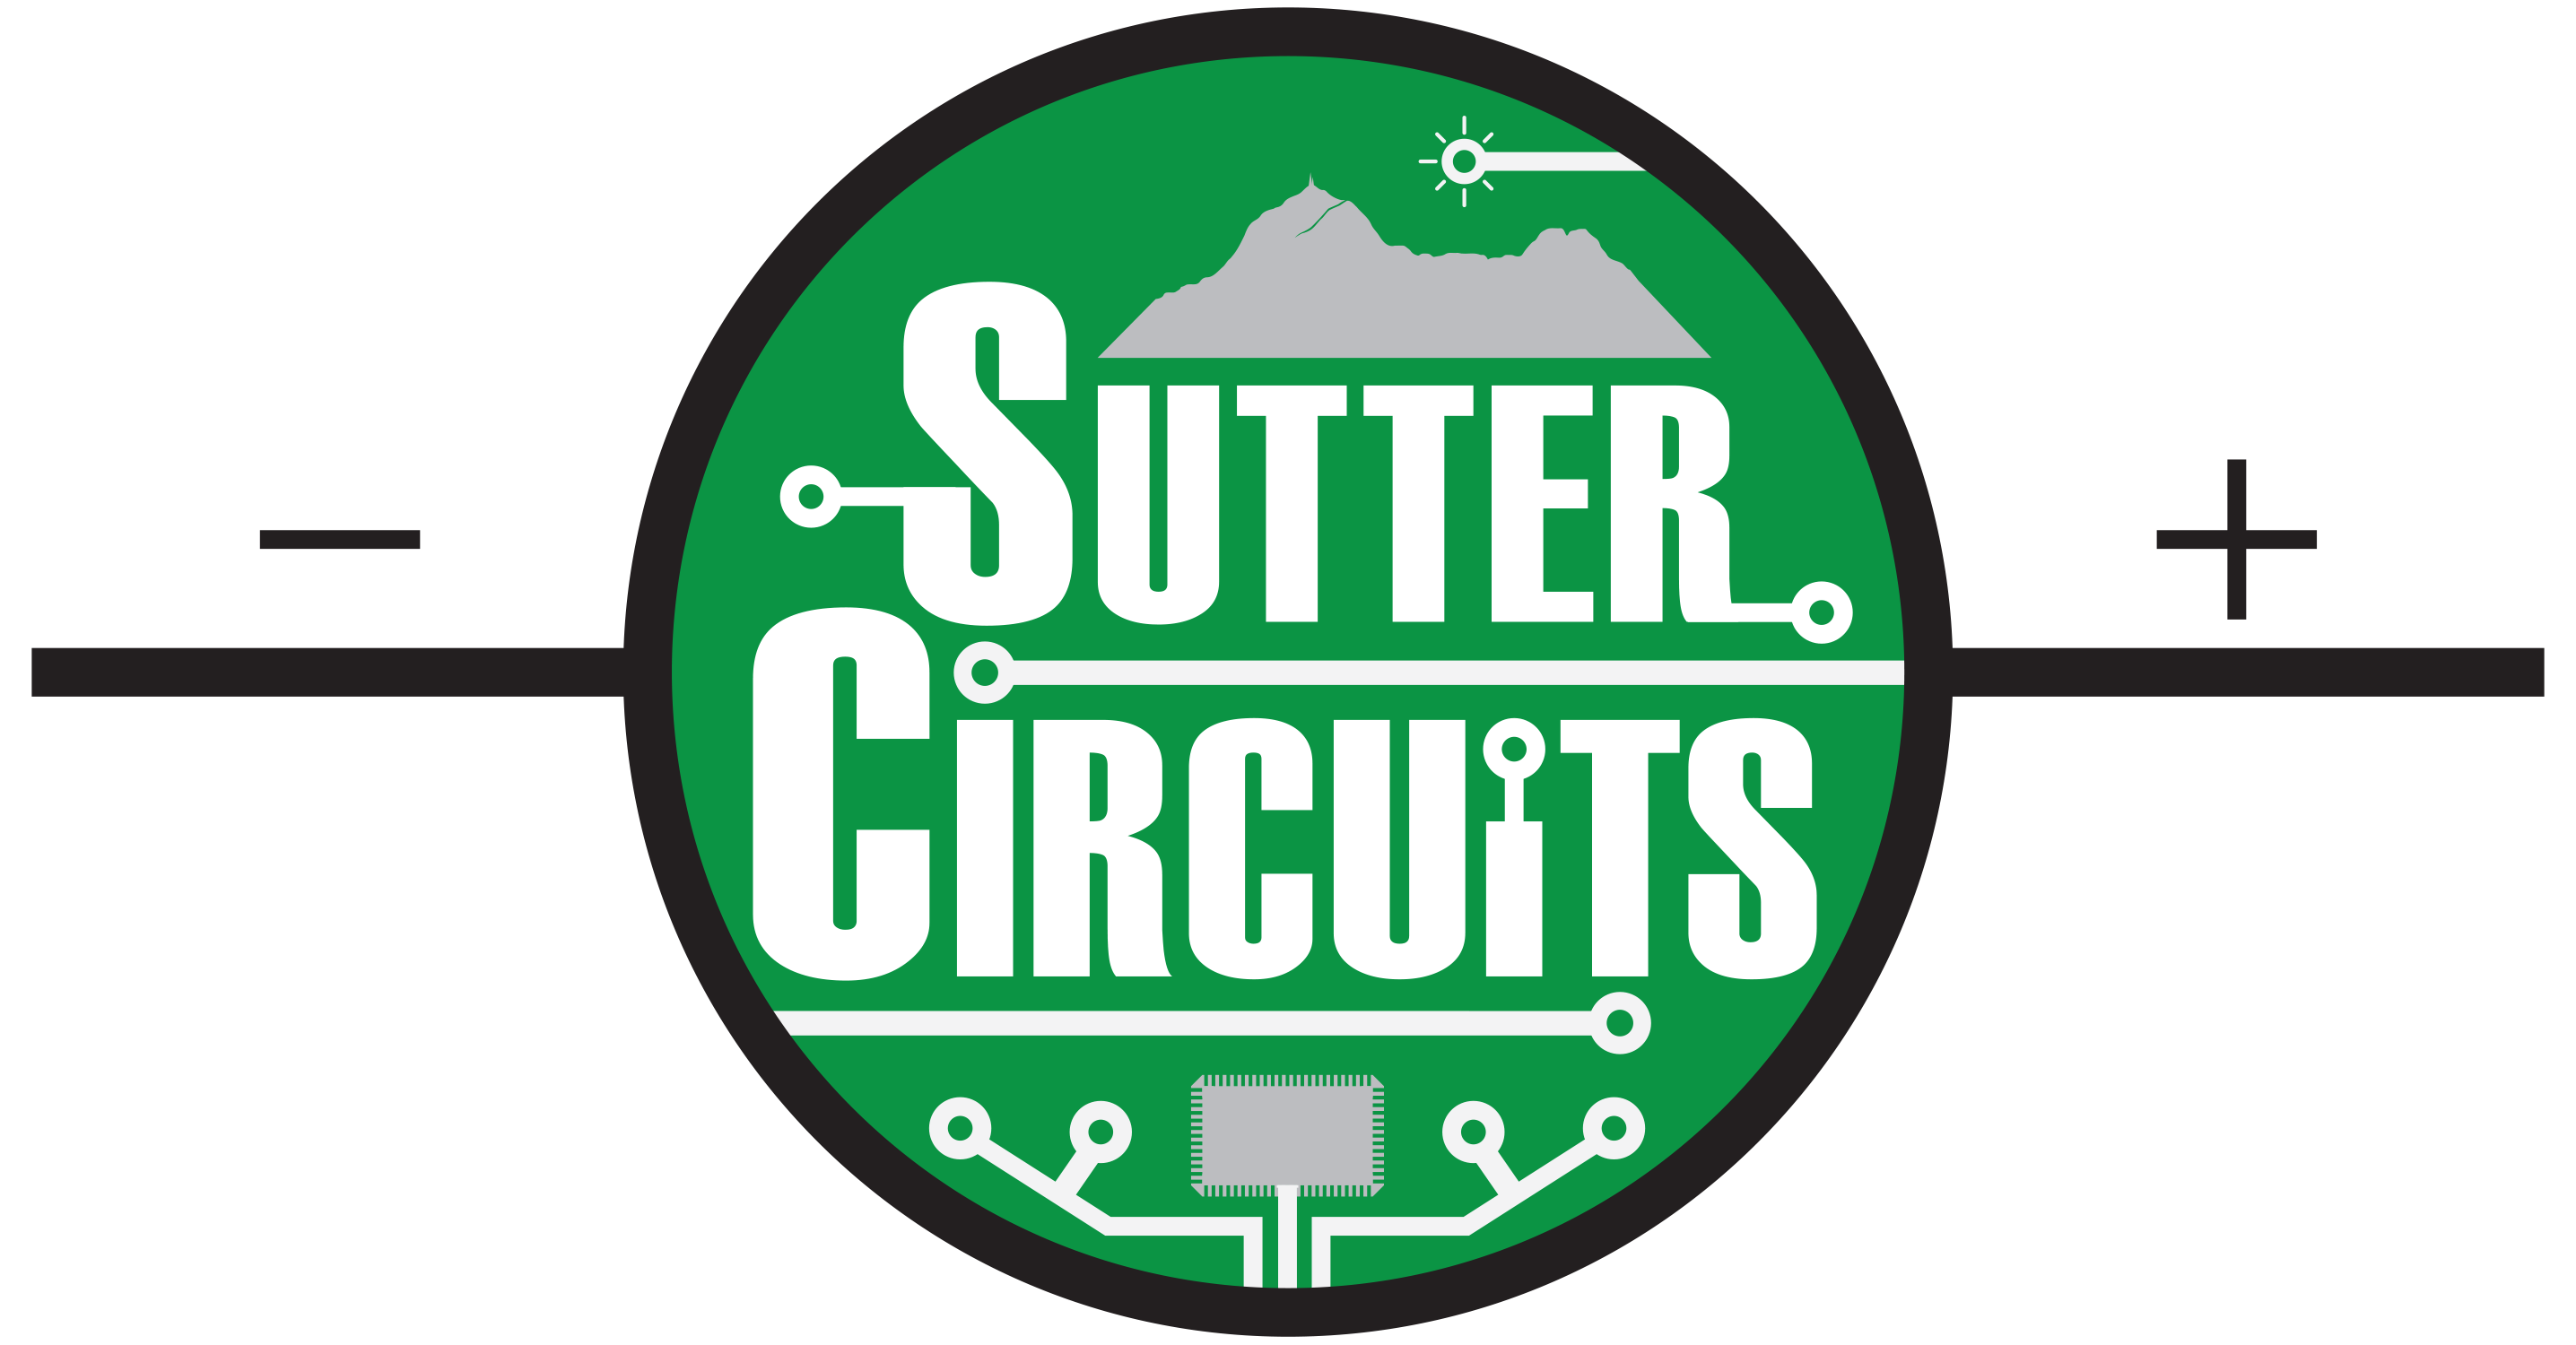 Sutter Circuits